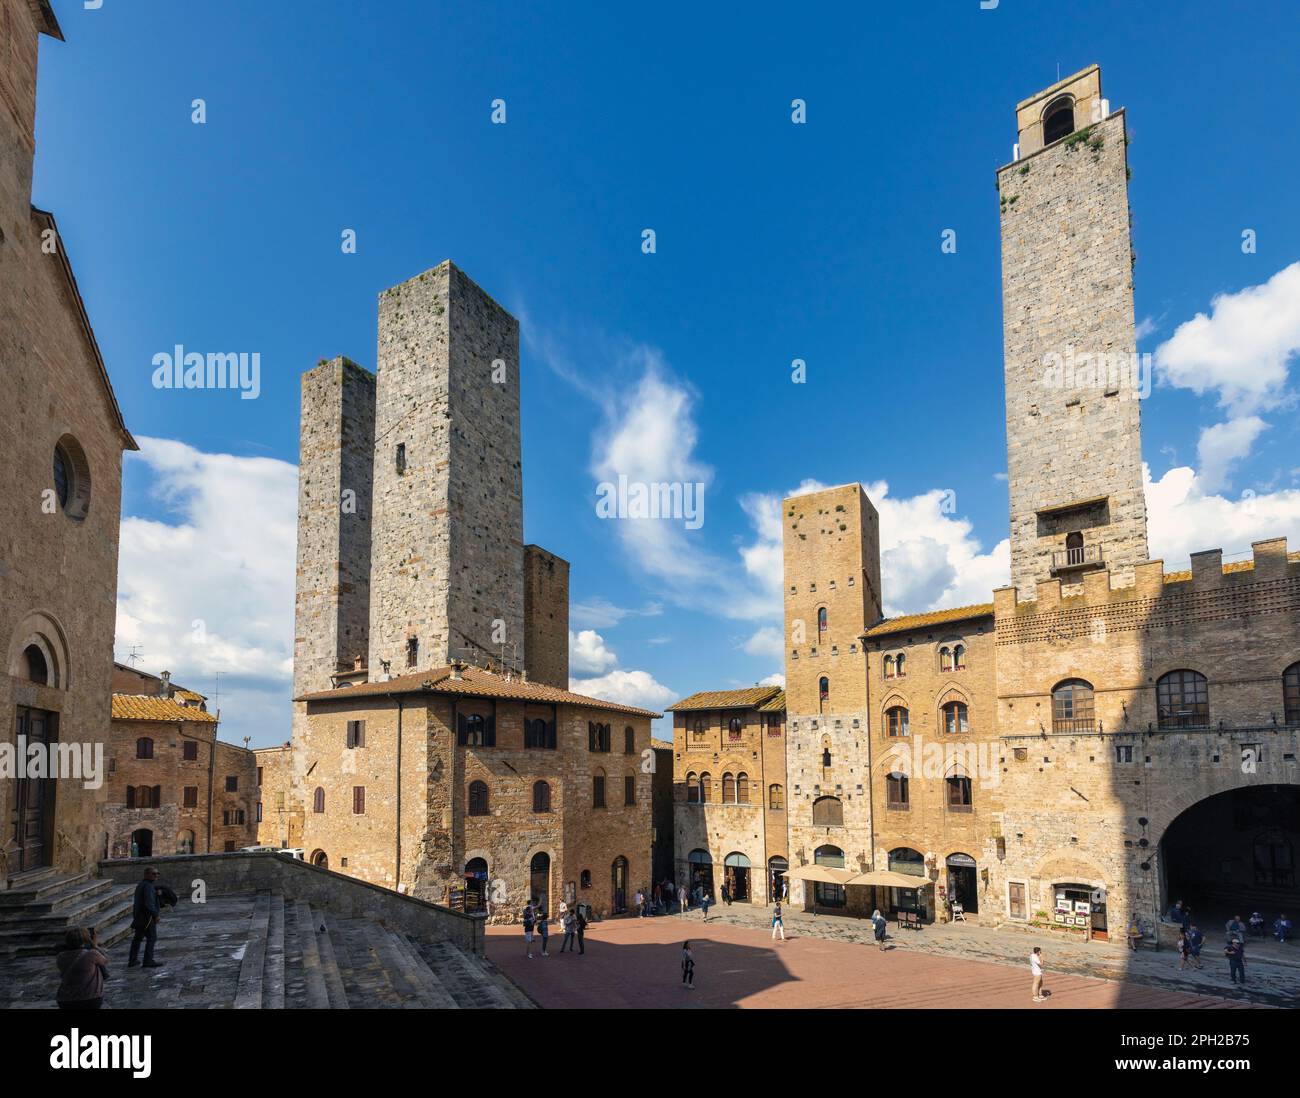 Piazza del Duomo, San Gimignano, Provinz Siena, Toskana, Italien. San Gimignano ist ein UNESCO-Weltkulturerbe. Stockfoto